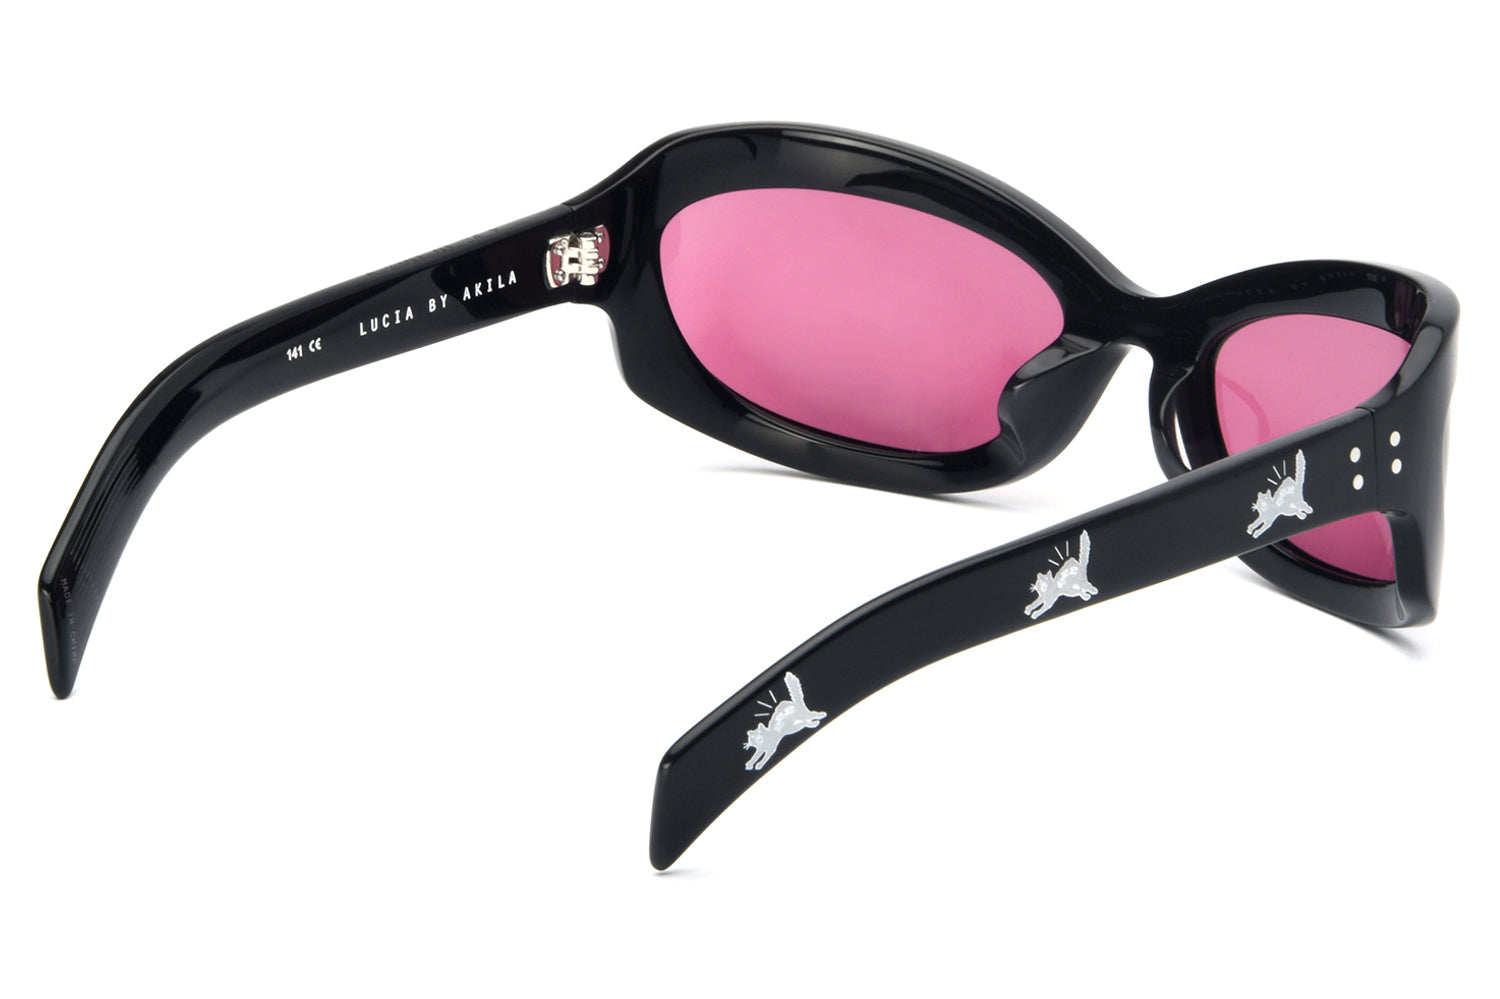 SGROMA - Roma Sunglasses | Vintage frames, Women's accessories, Sunglasses  accessories